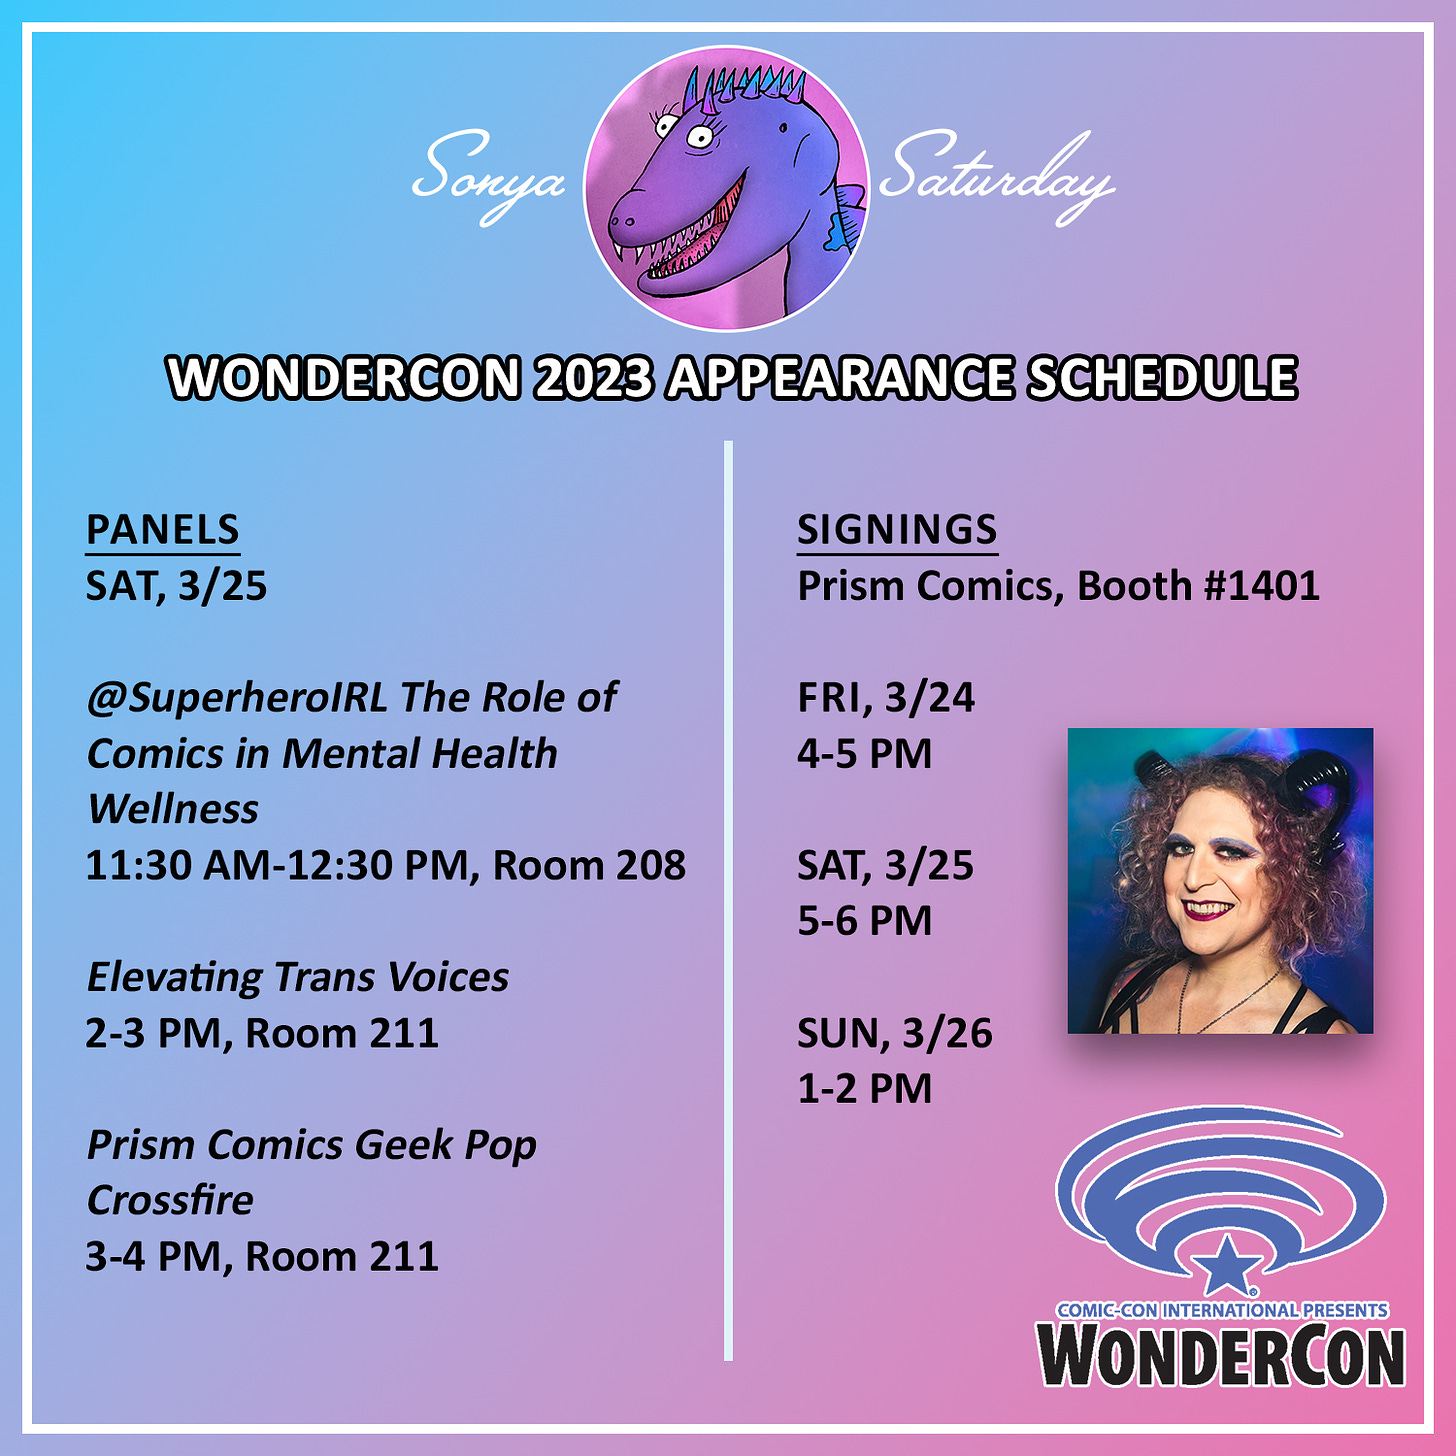 Sonya Saturday's WonderCon 2023 appearance schedule